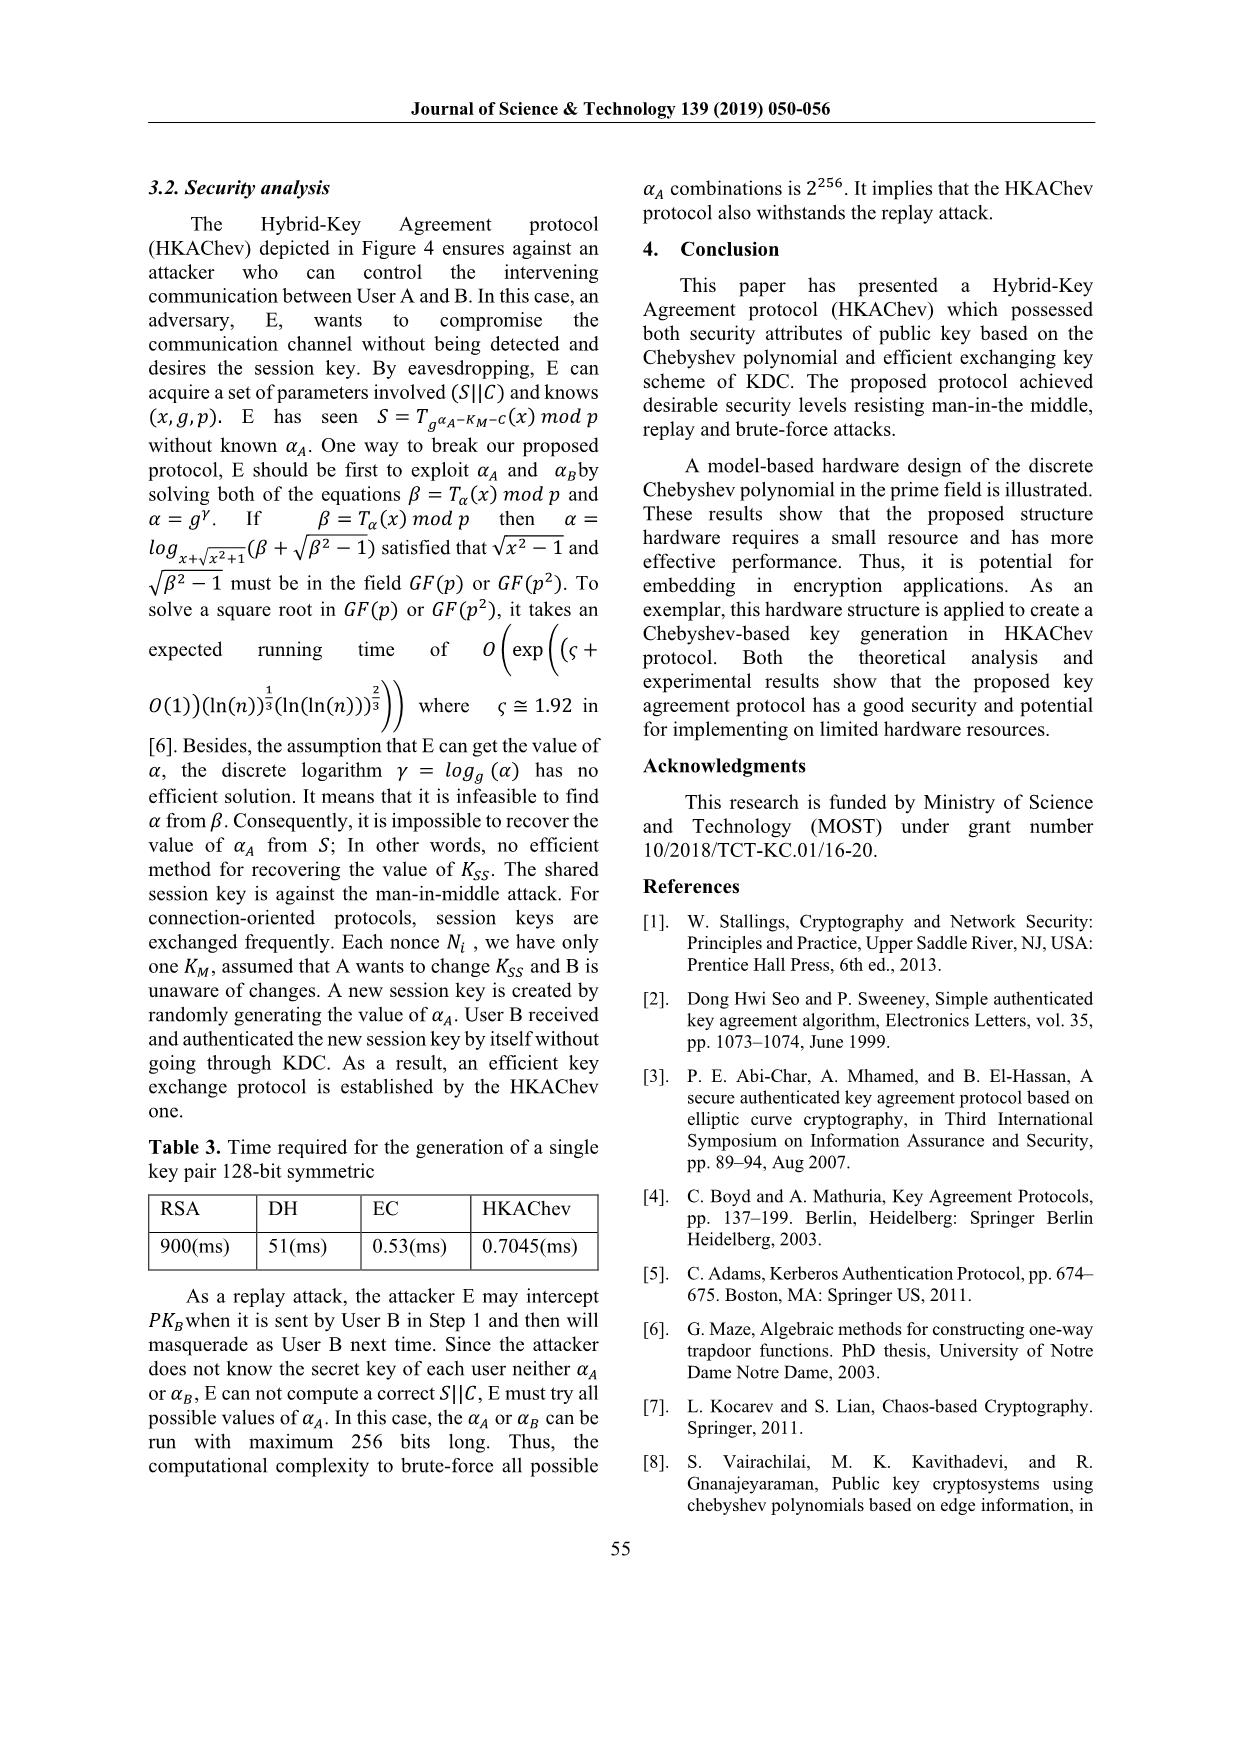 Hybrid - Key agreement protocol based on chebyshev polynomials trang 6